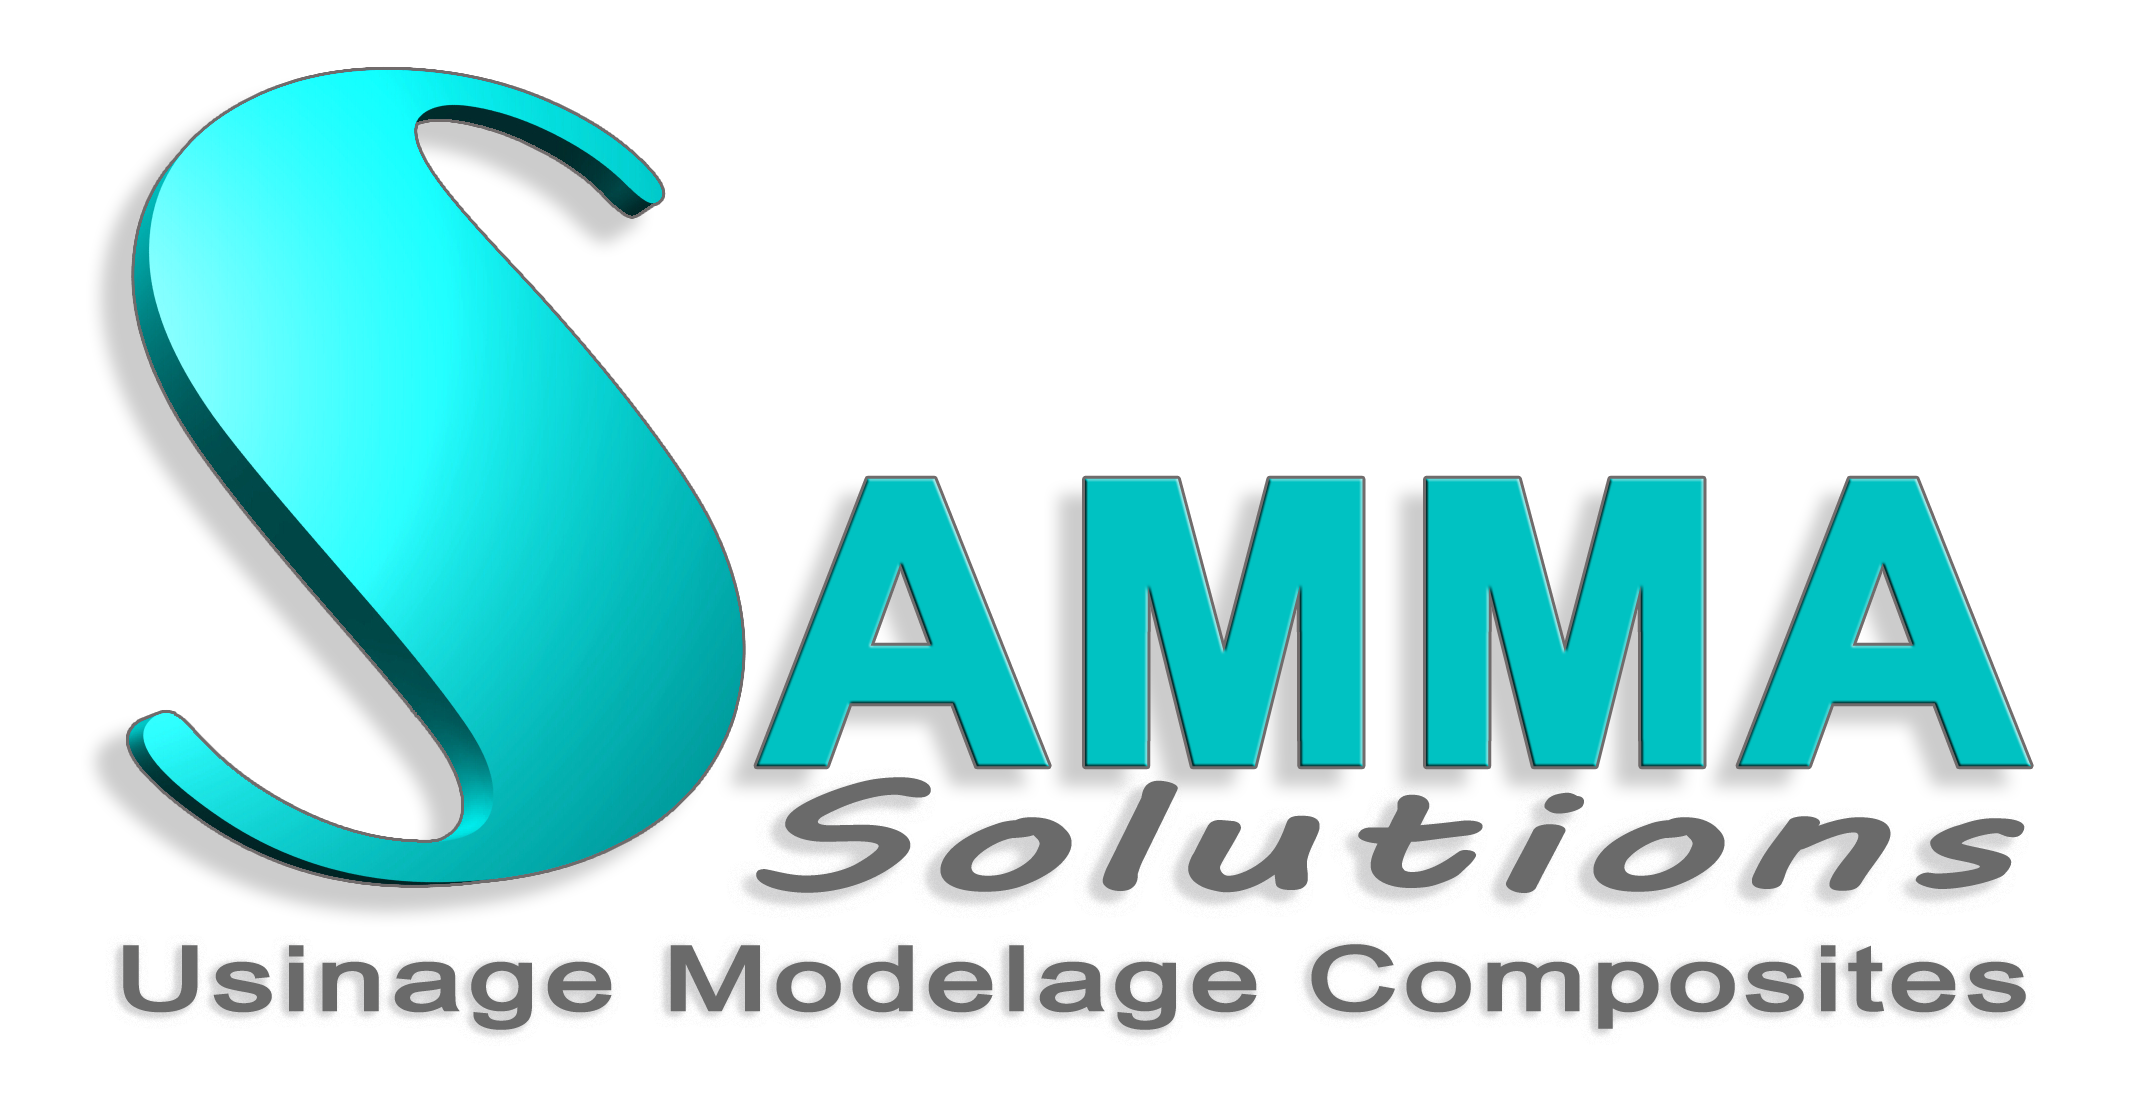 SAMMA Usinage Modelage Composite